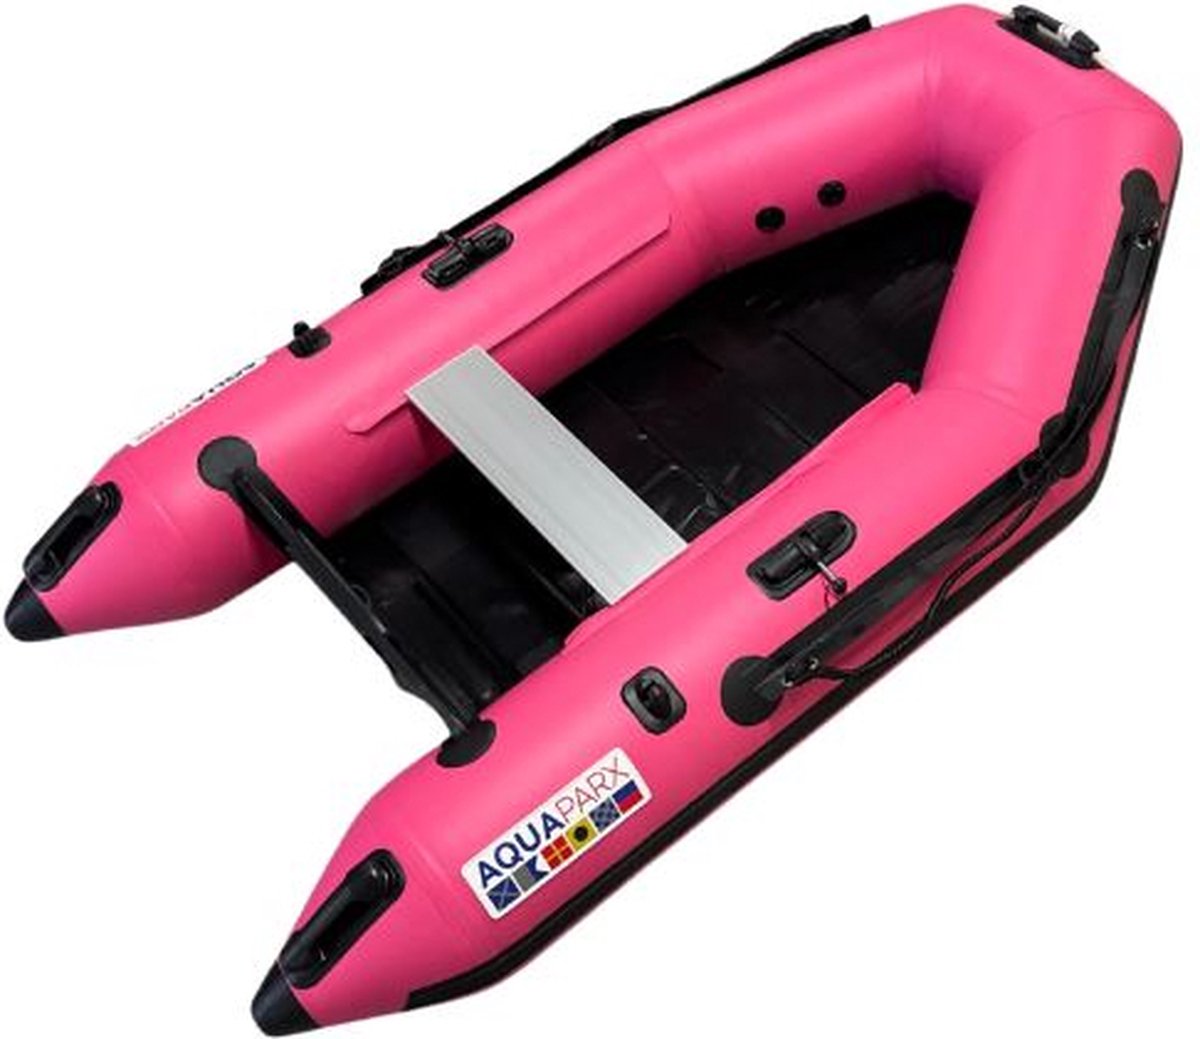 Aquaparx 230 pro MKIII roze - rubberboot - opblaasboot